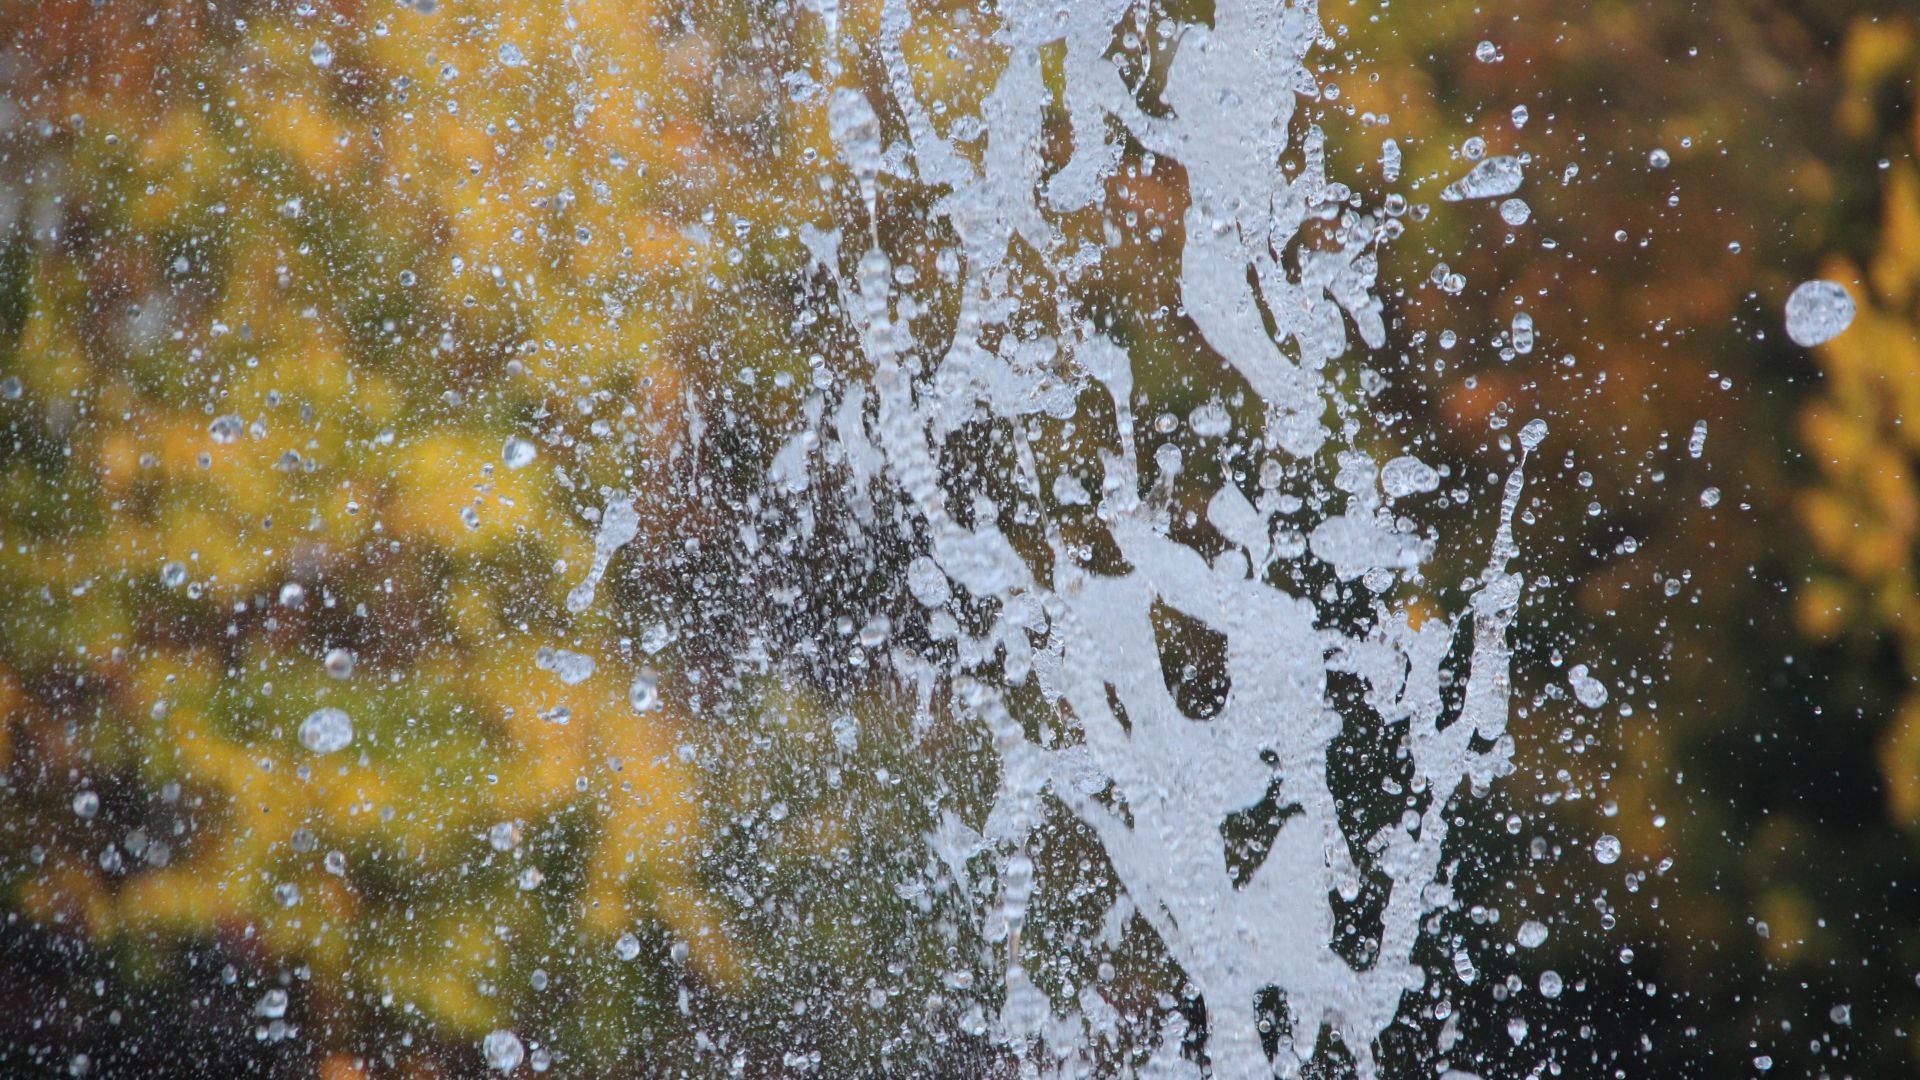 Wallpaper water splashes close up